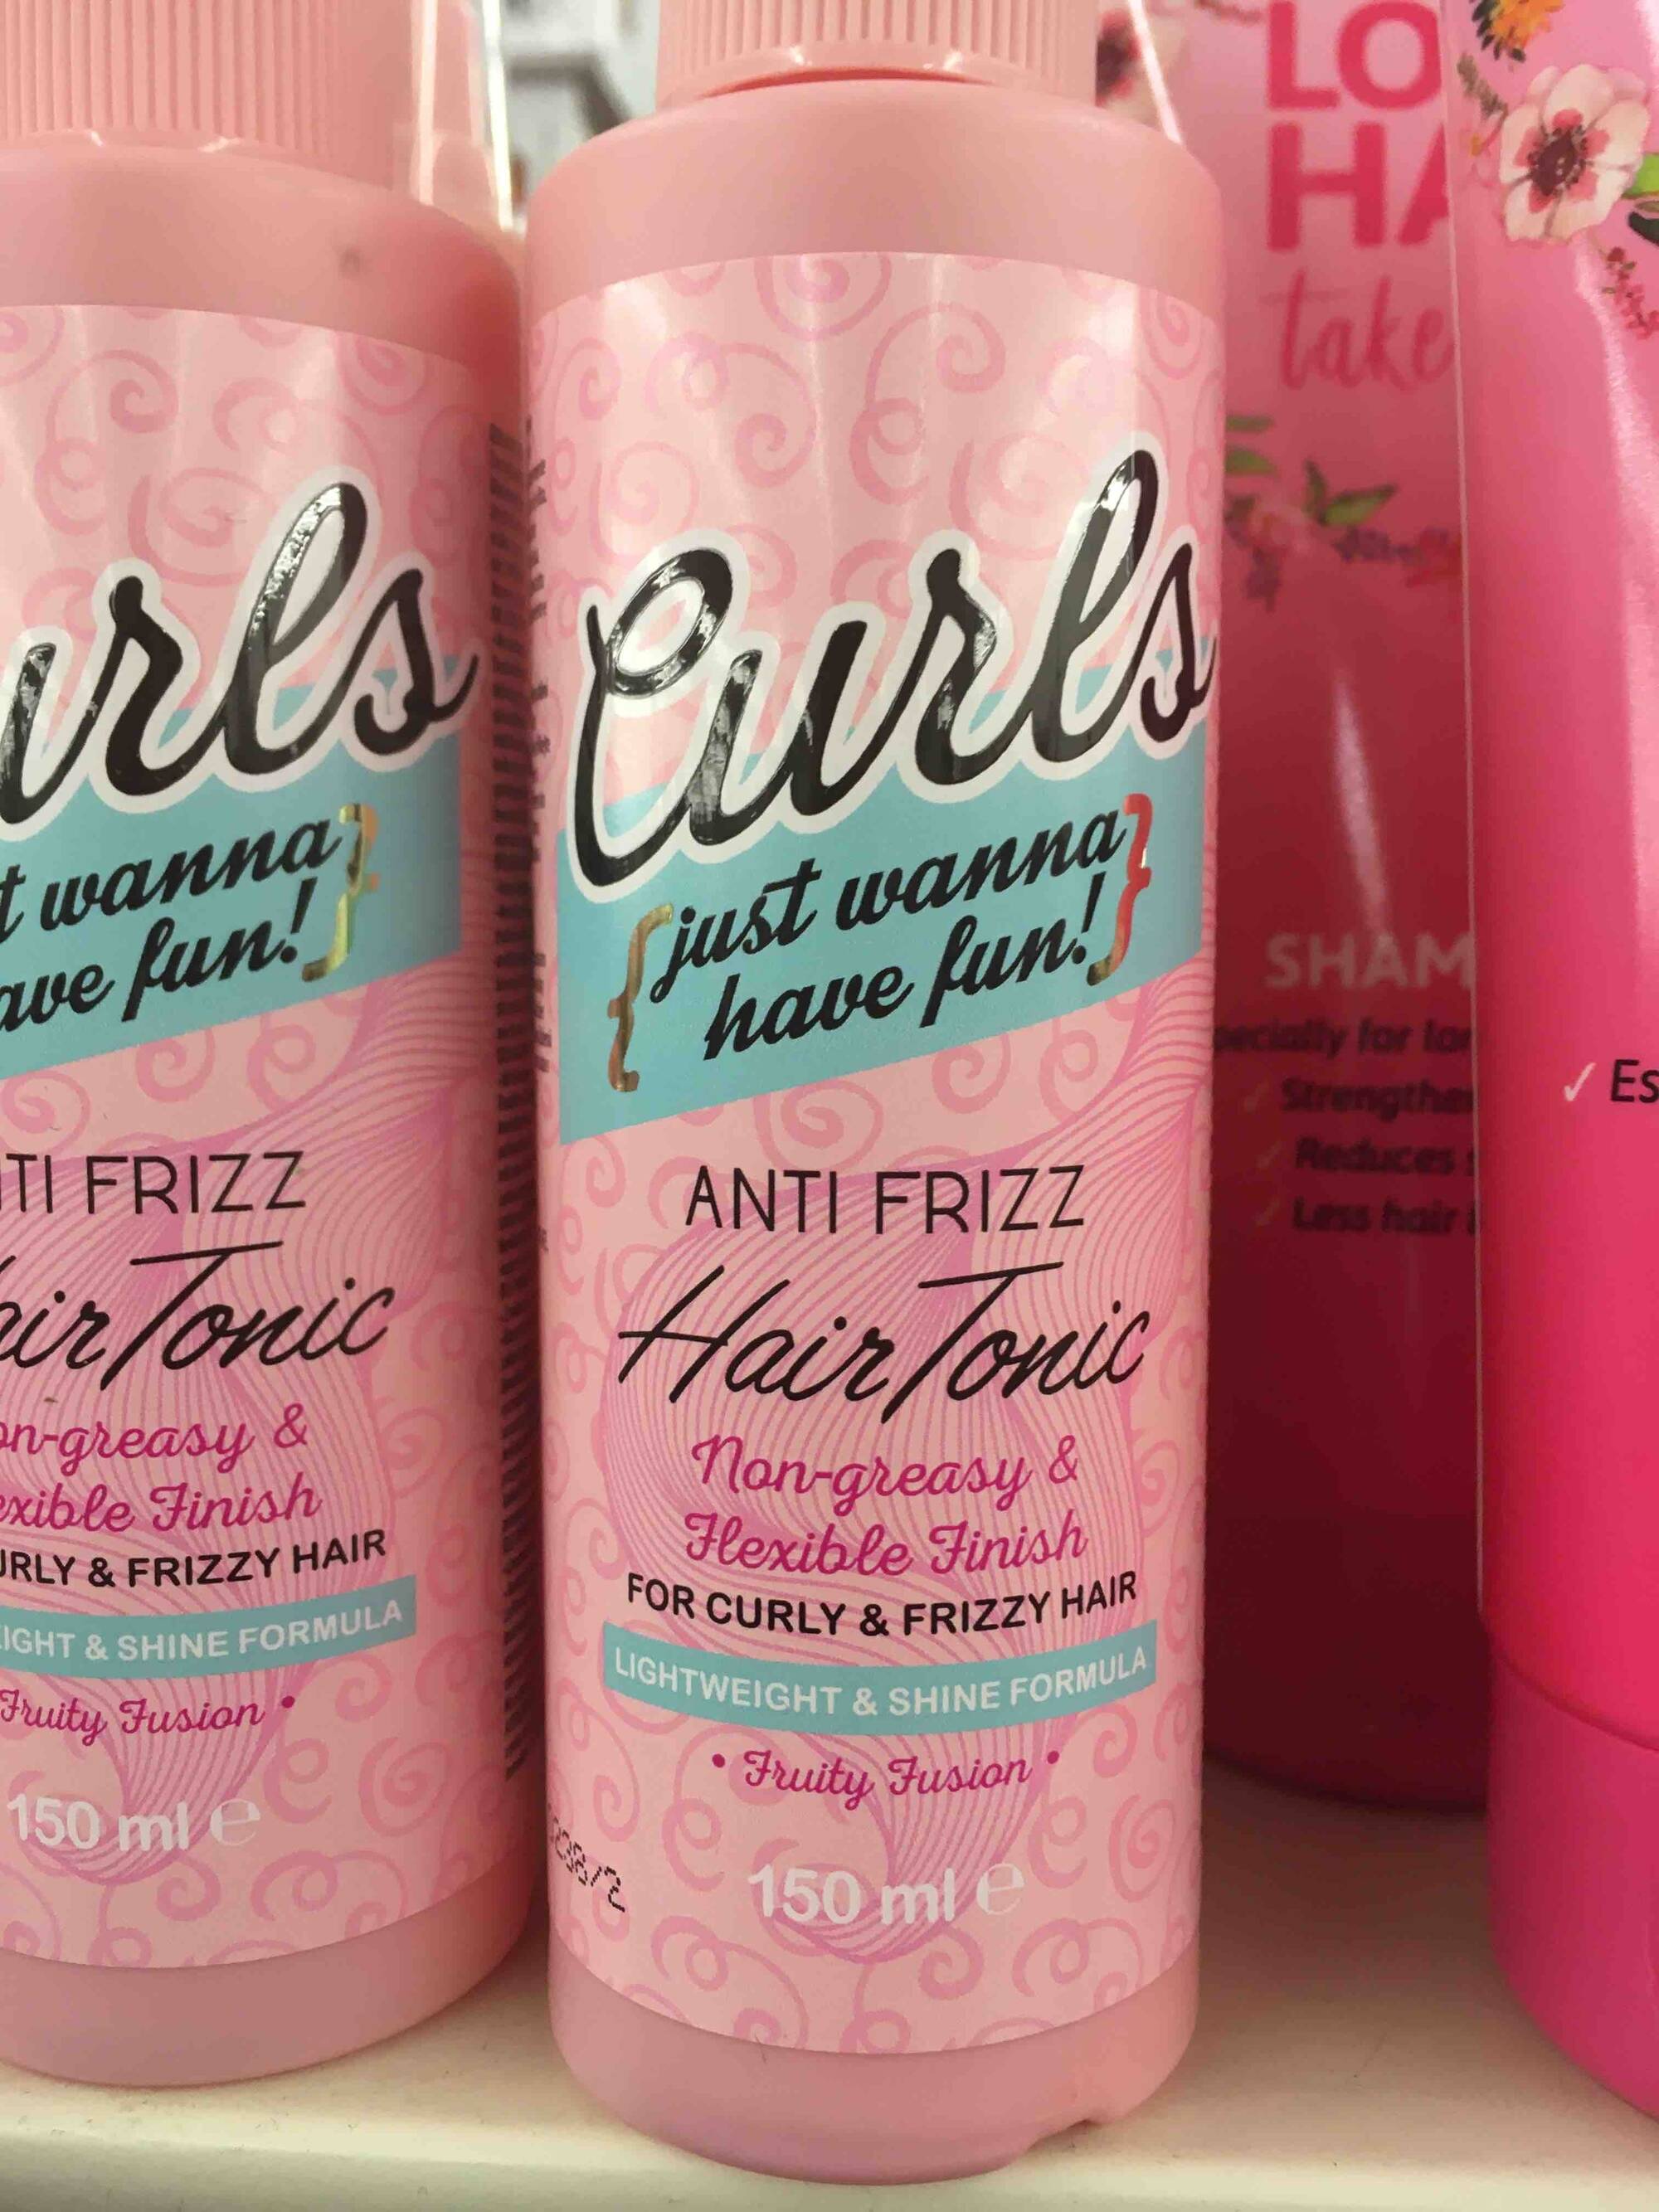 CURLS - Anti frizz - Hair tonic